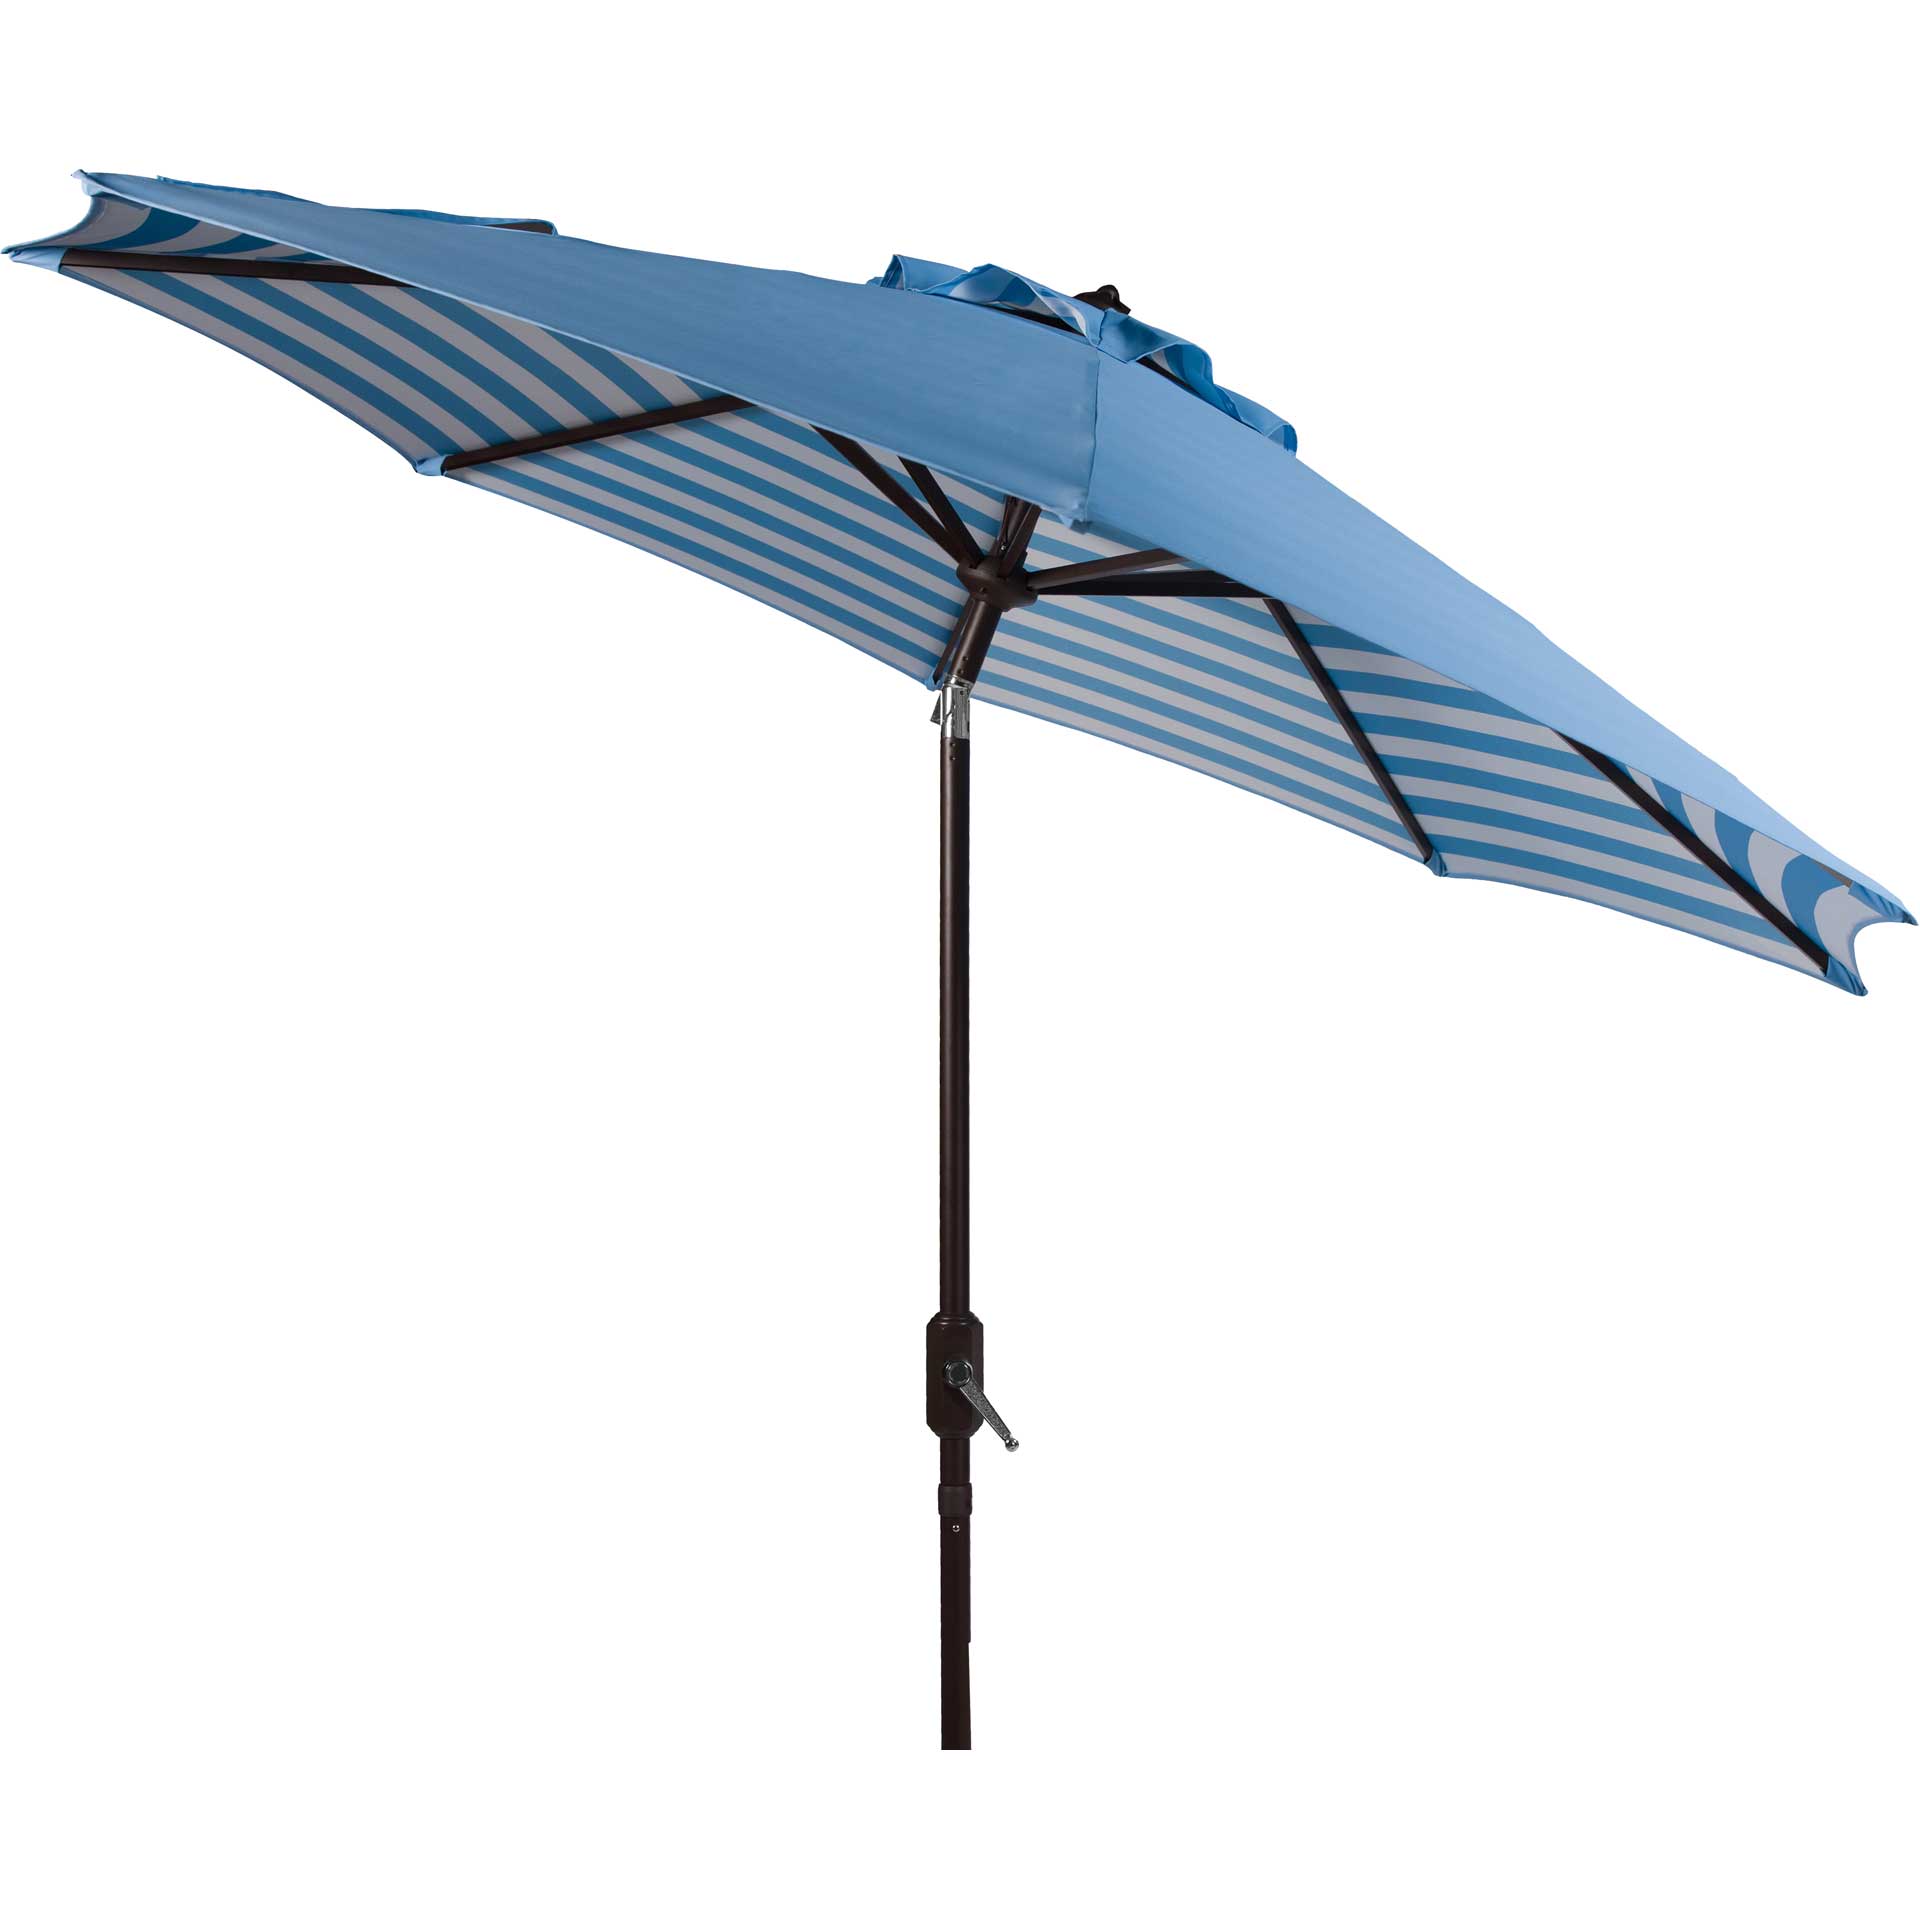 Atara Striped Outdoor Auto Tilt Umbrella Blue/White